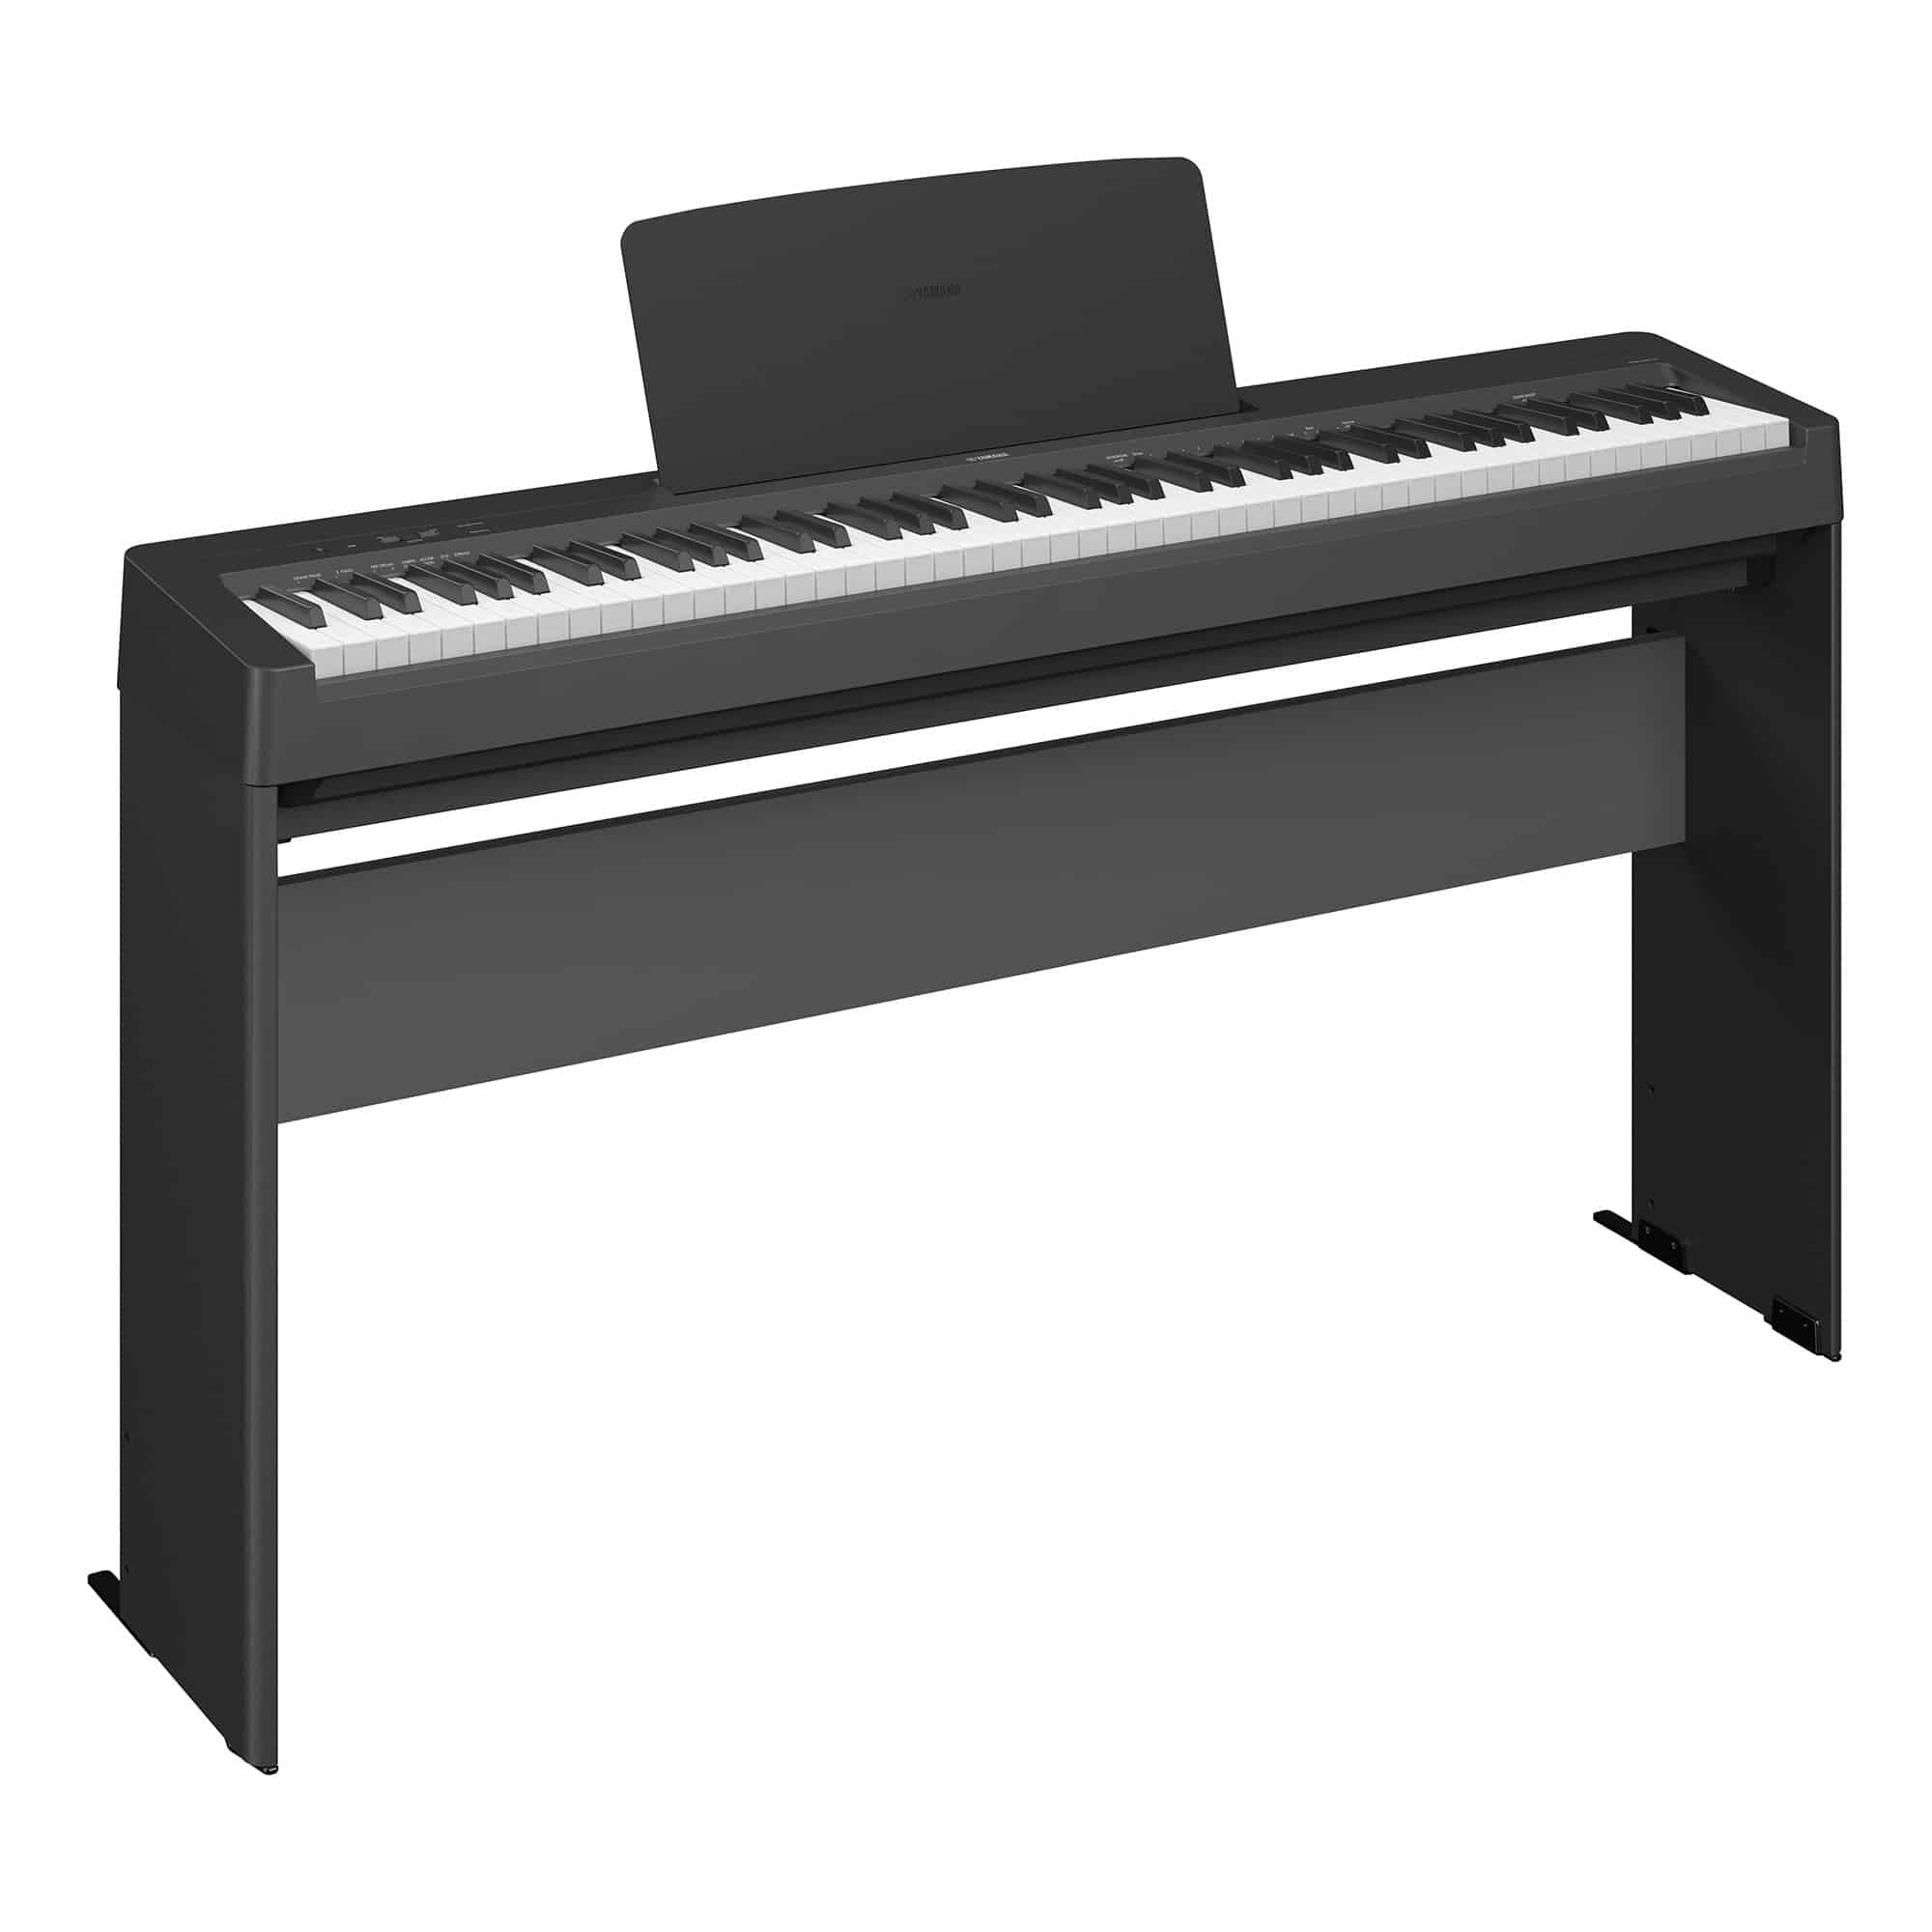 YAMAHA PIANO NUMERIQUE BLACK – P-45